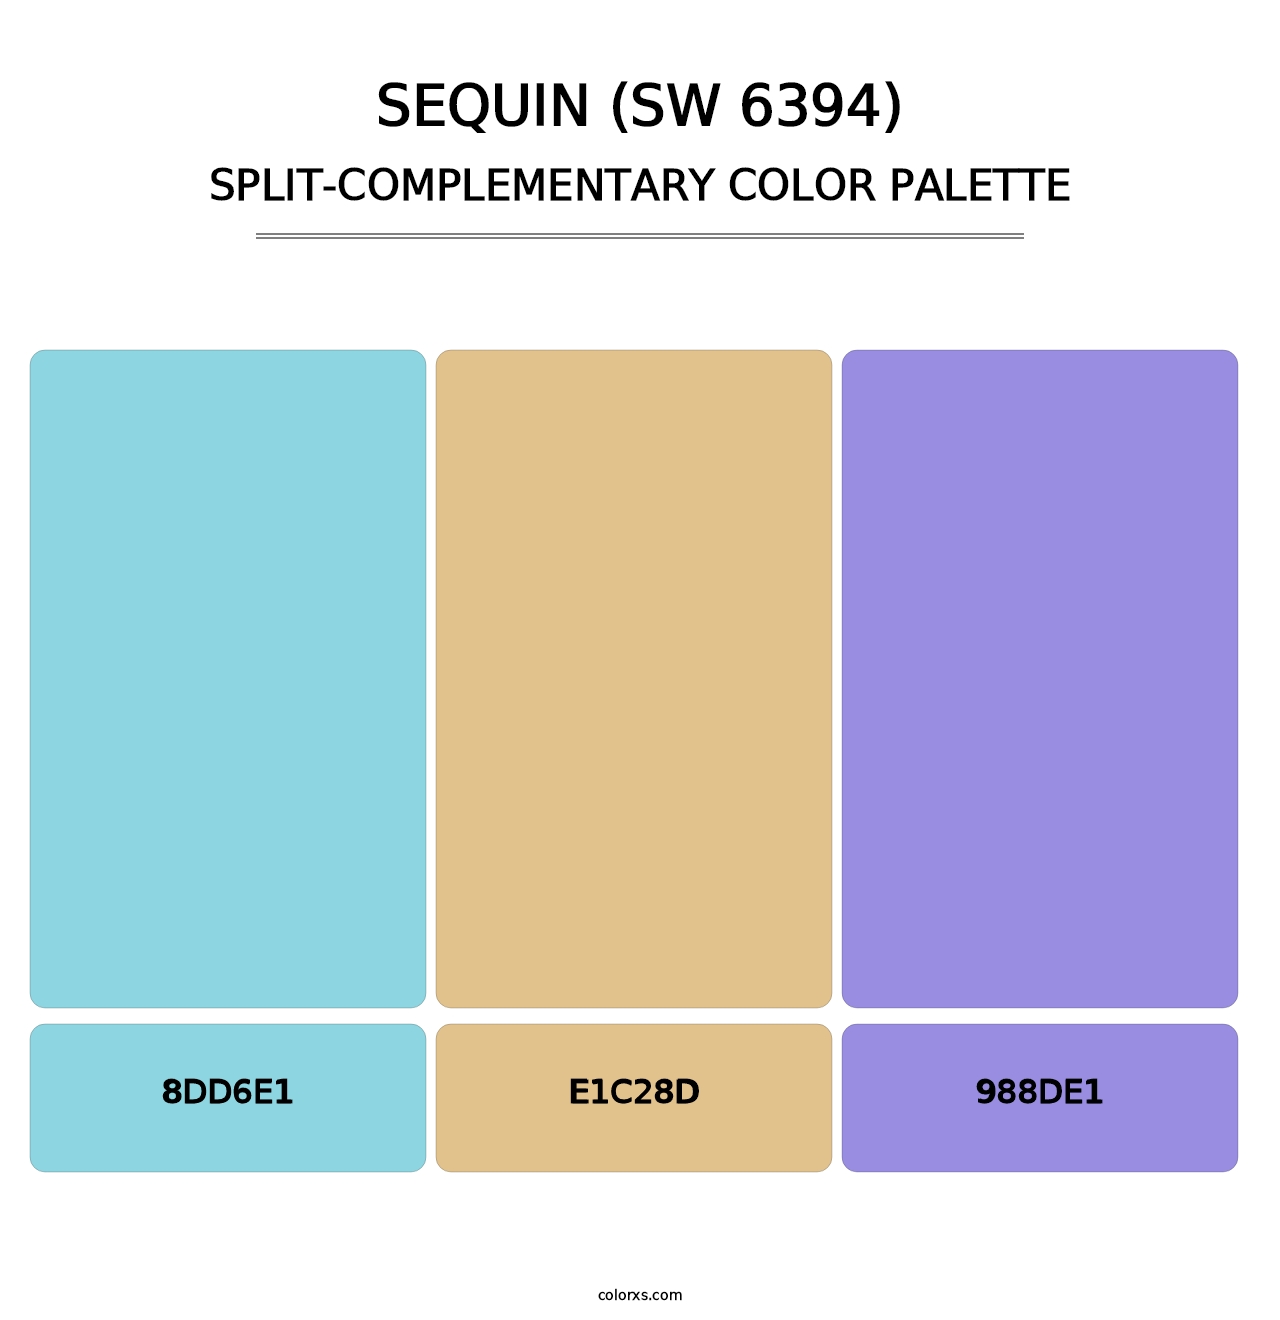 Sequin (SW 6394) - Split-Complementary Color Palette